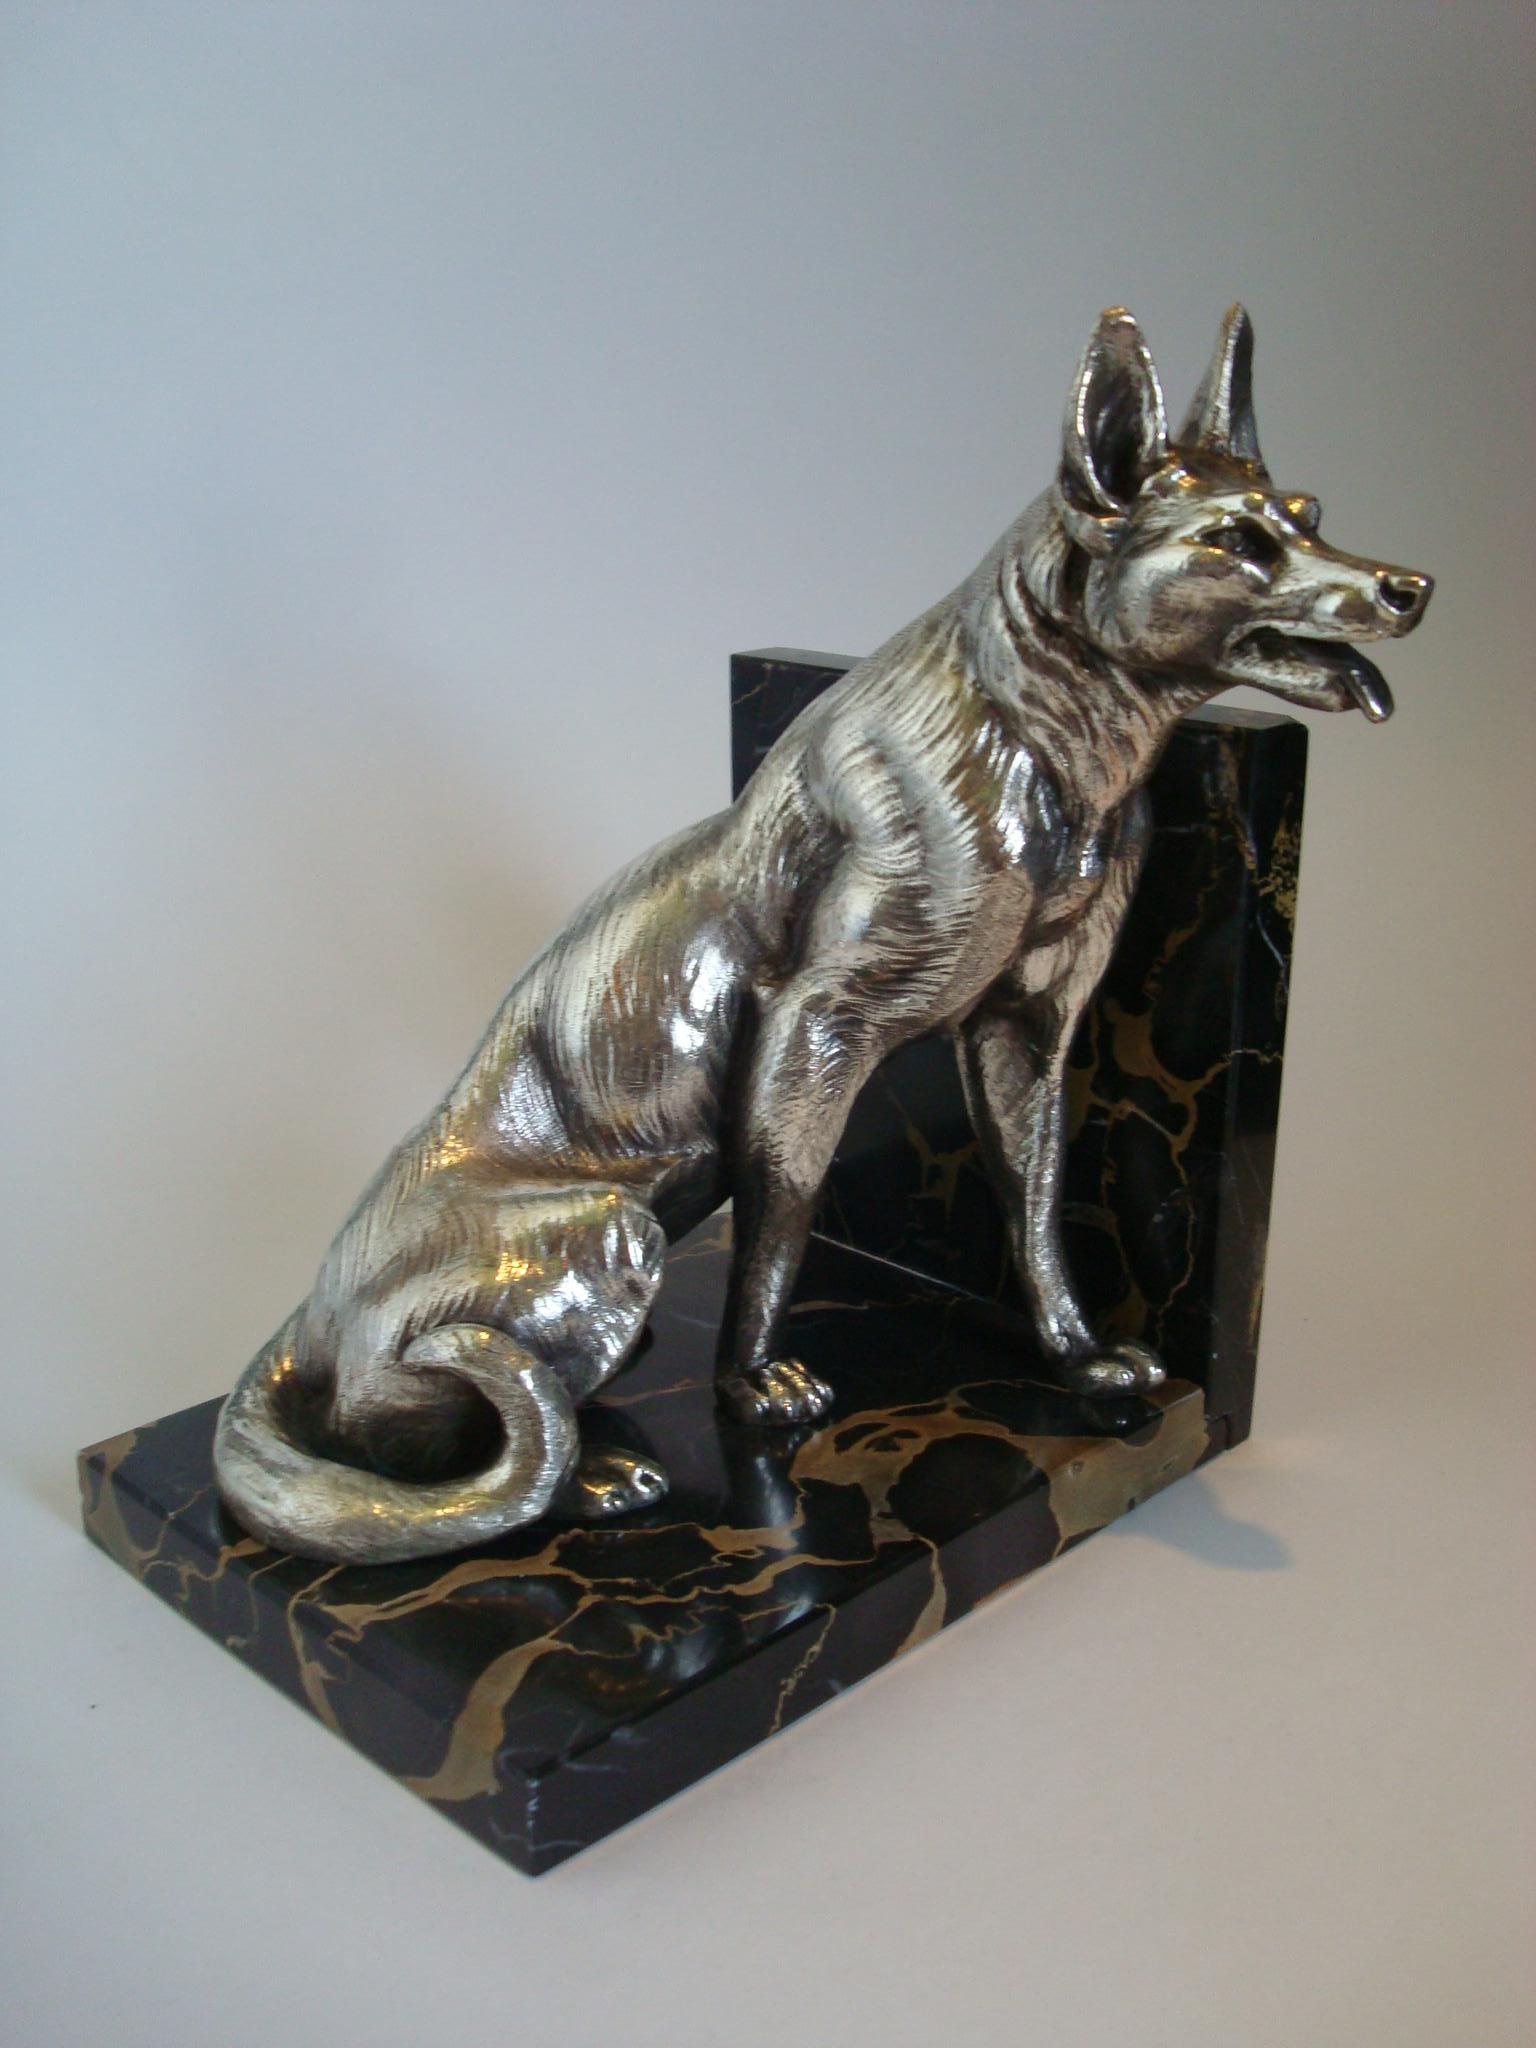 German Shepherd Dog Sculpture Bookends by Louis-Albert Carvin 1